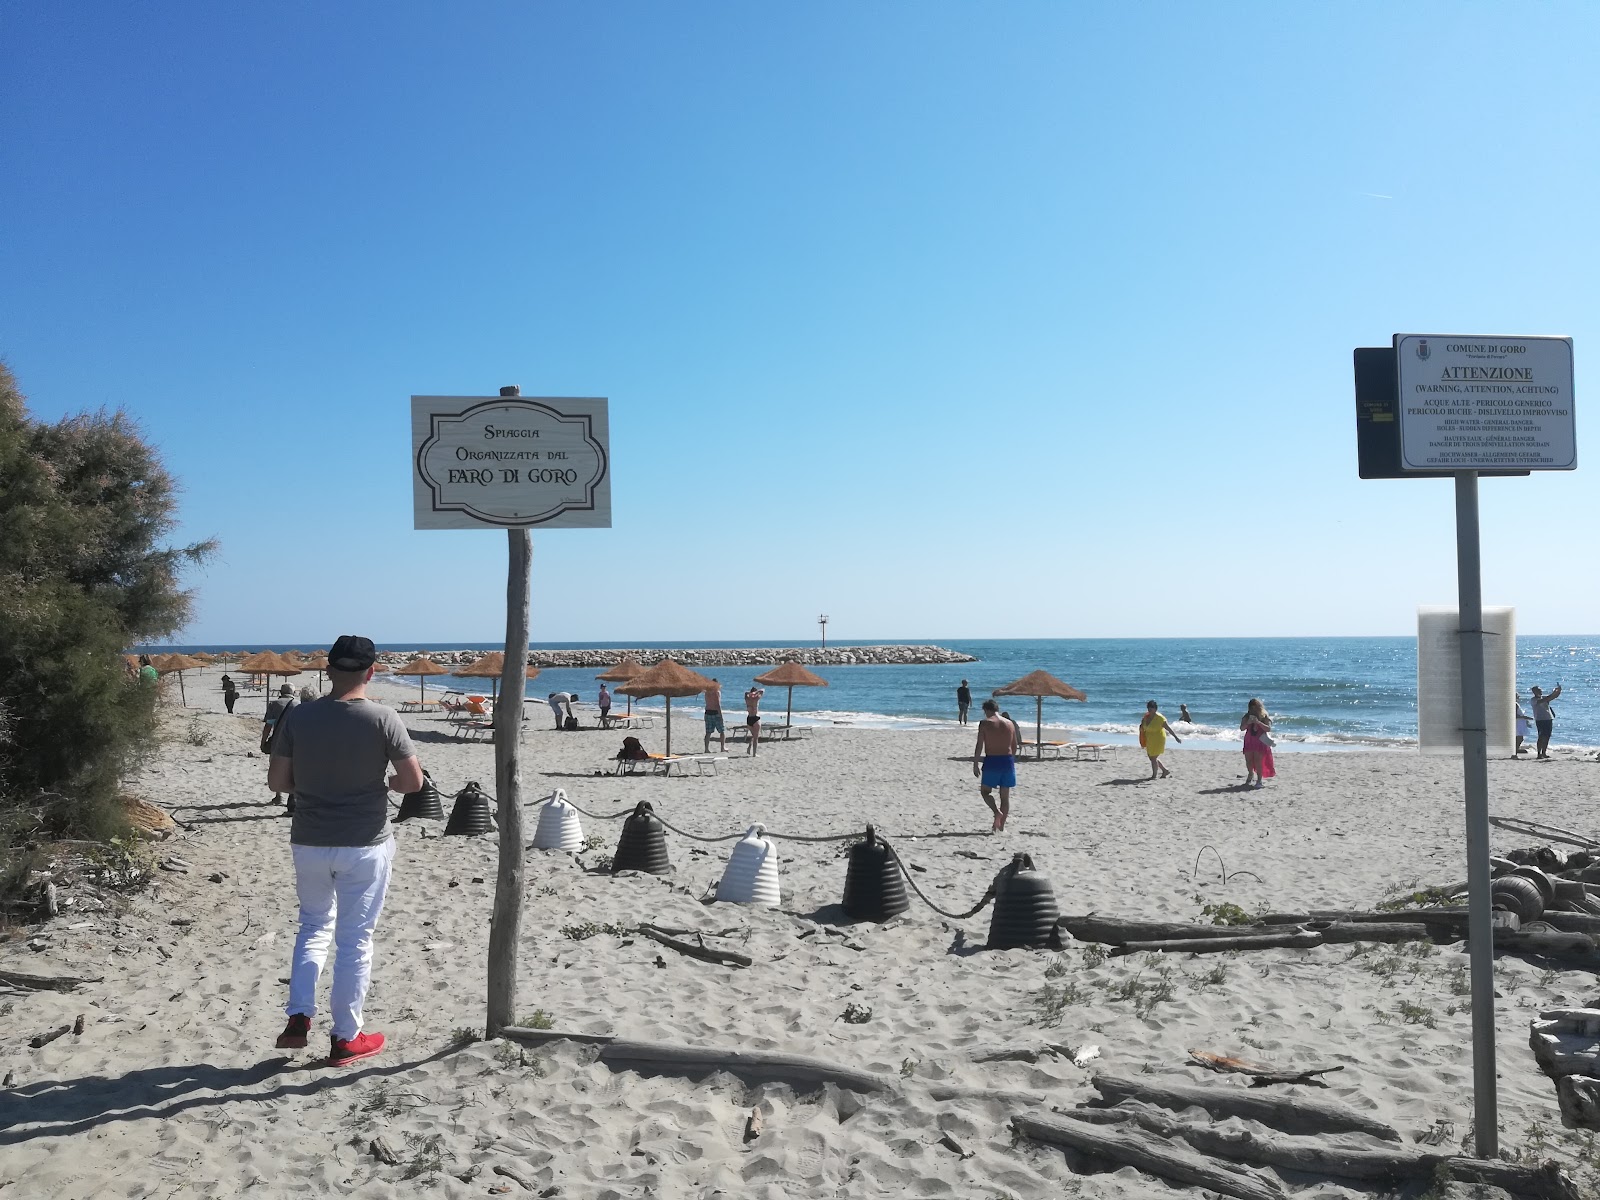 Foto de Spiaggia dell'Isola dell'Amore - lugar popular entre os apreciadores de relaxamento